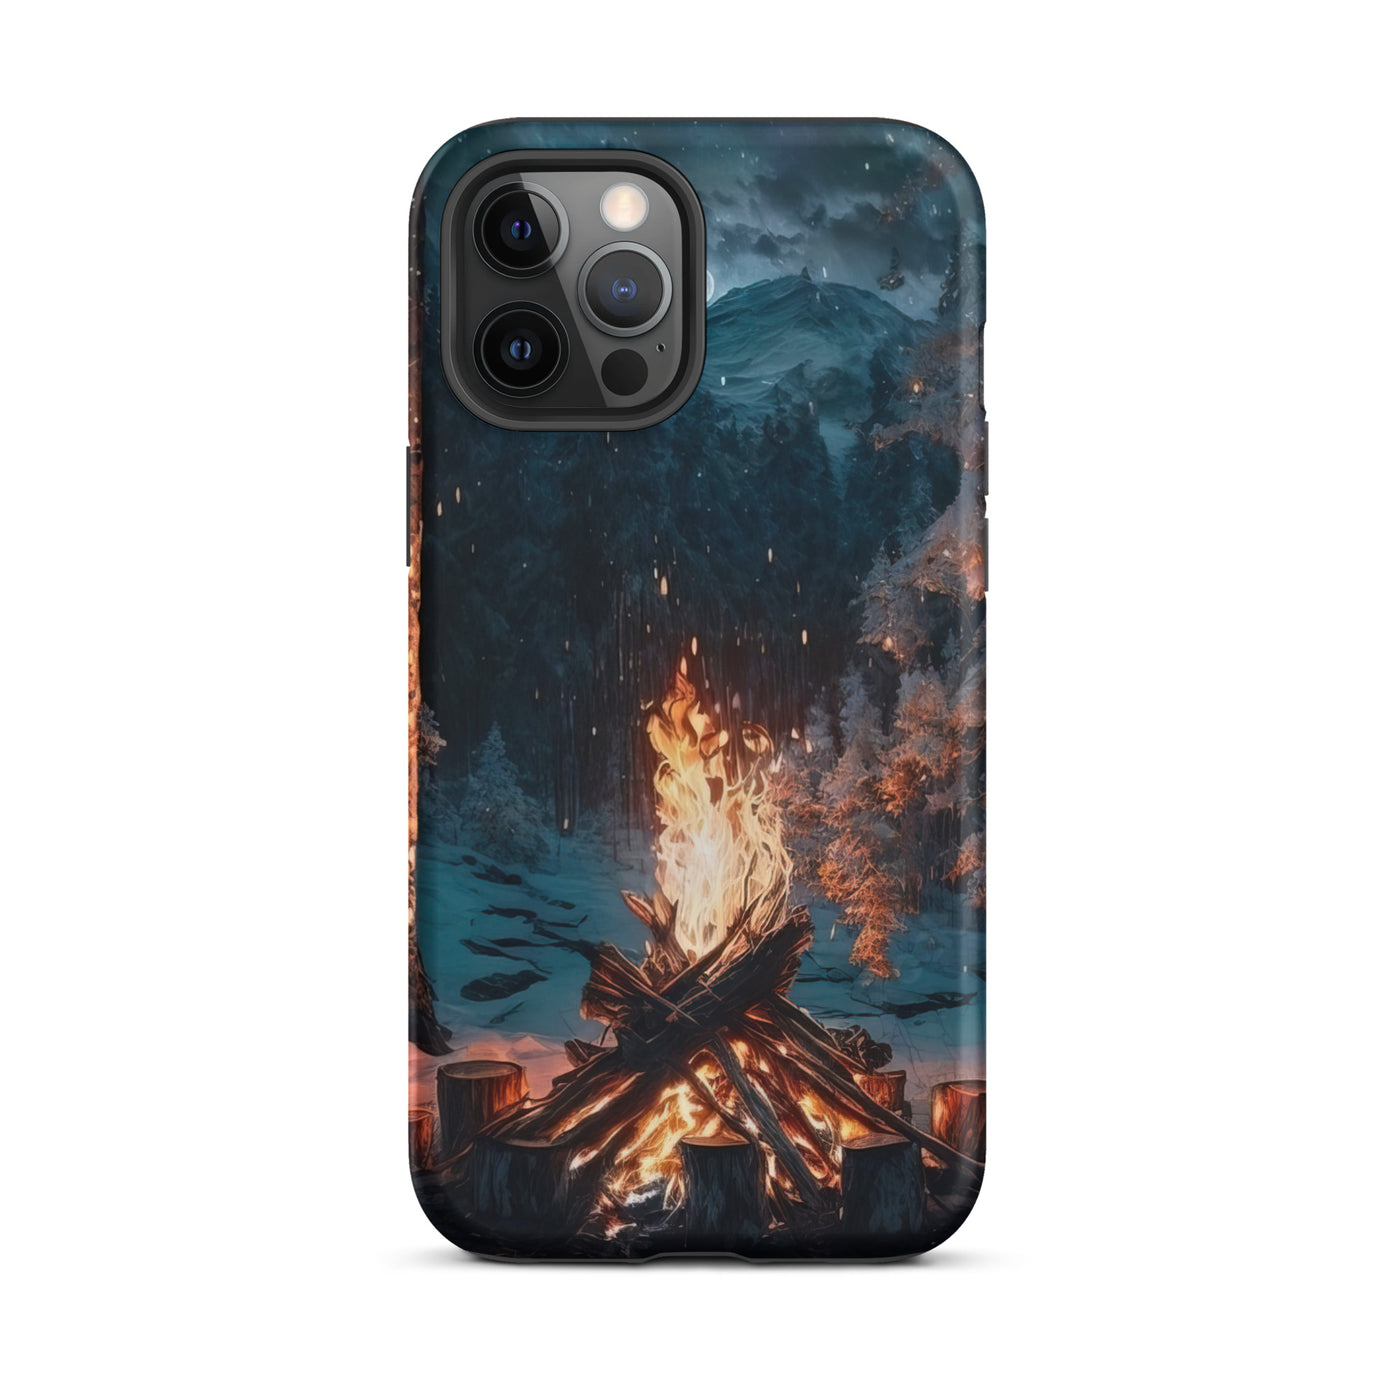 Lagerfeuer beim Camping - Wald mit Schneebedeckten Bäumen - Malerei - iPhone Schutzhülle (robust) camping xxx iPhone 12 Pro Max